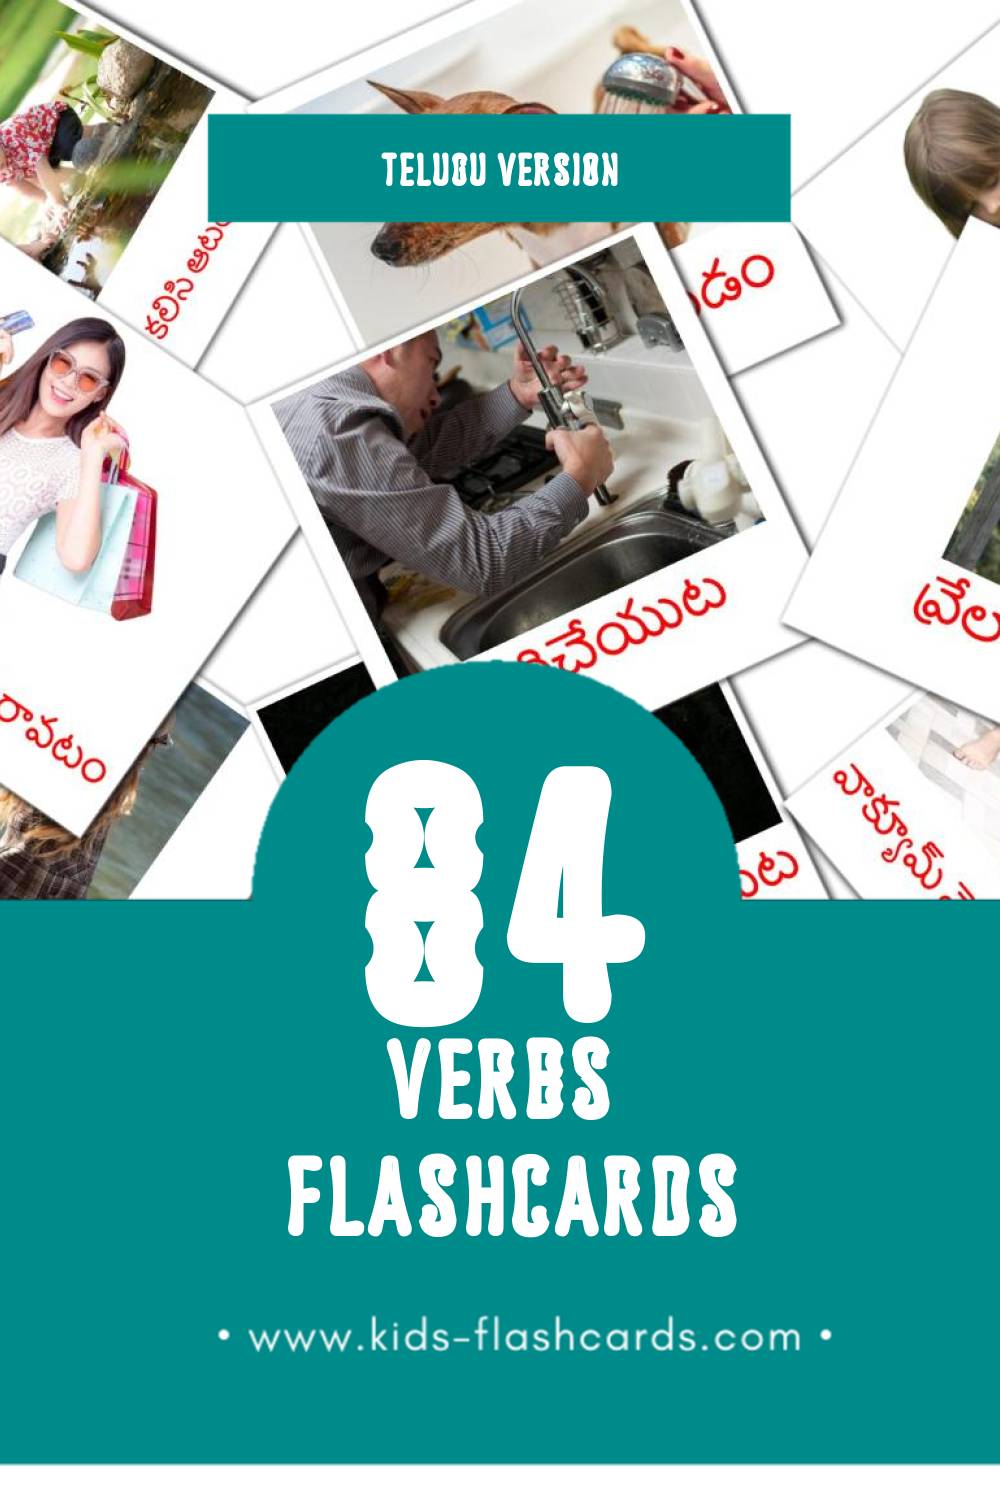 Visual క్రియలు  Flashcards for Toddlers (84 cards in Telugu)